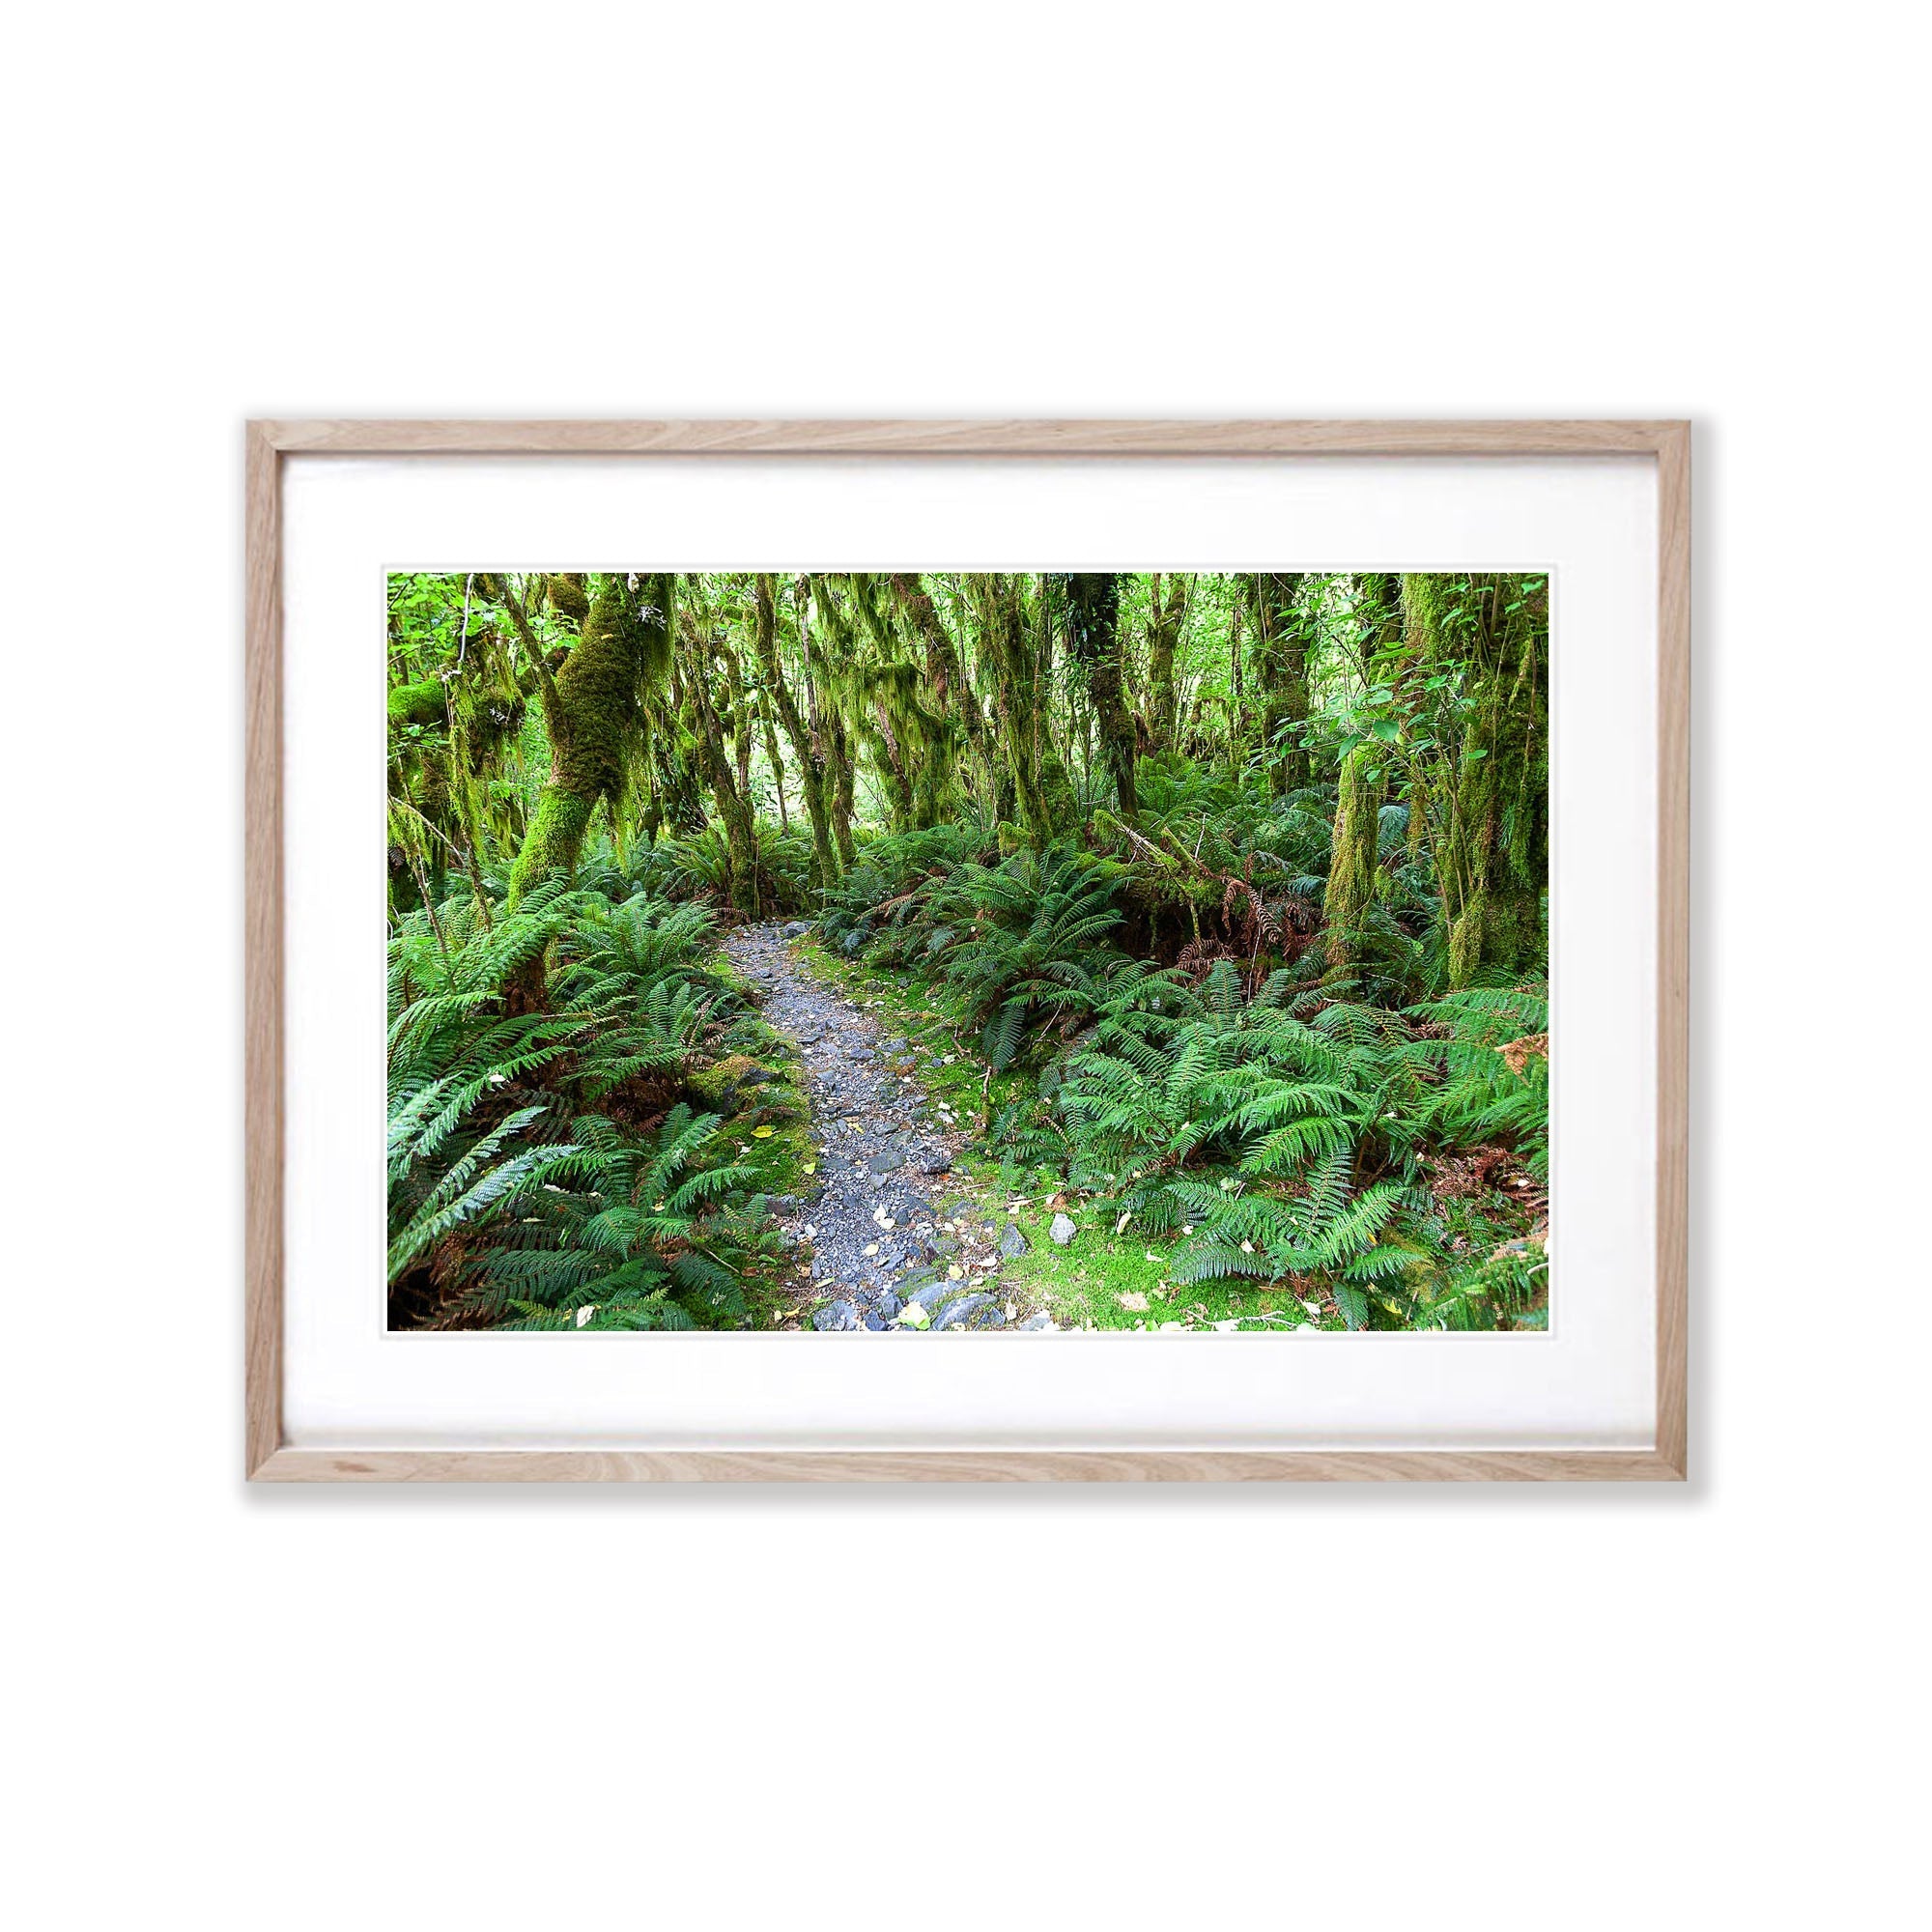 Rainforest near Arthur River, Milford Track - New Zealand